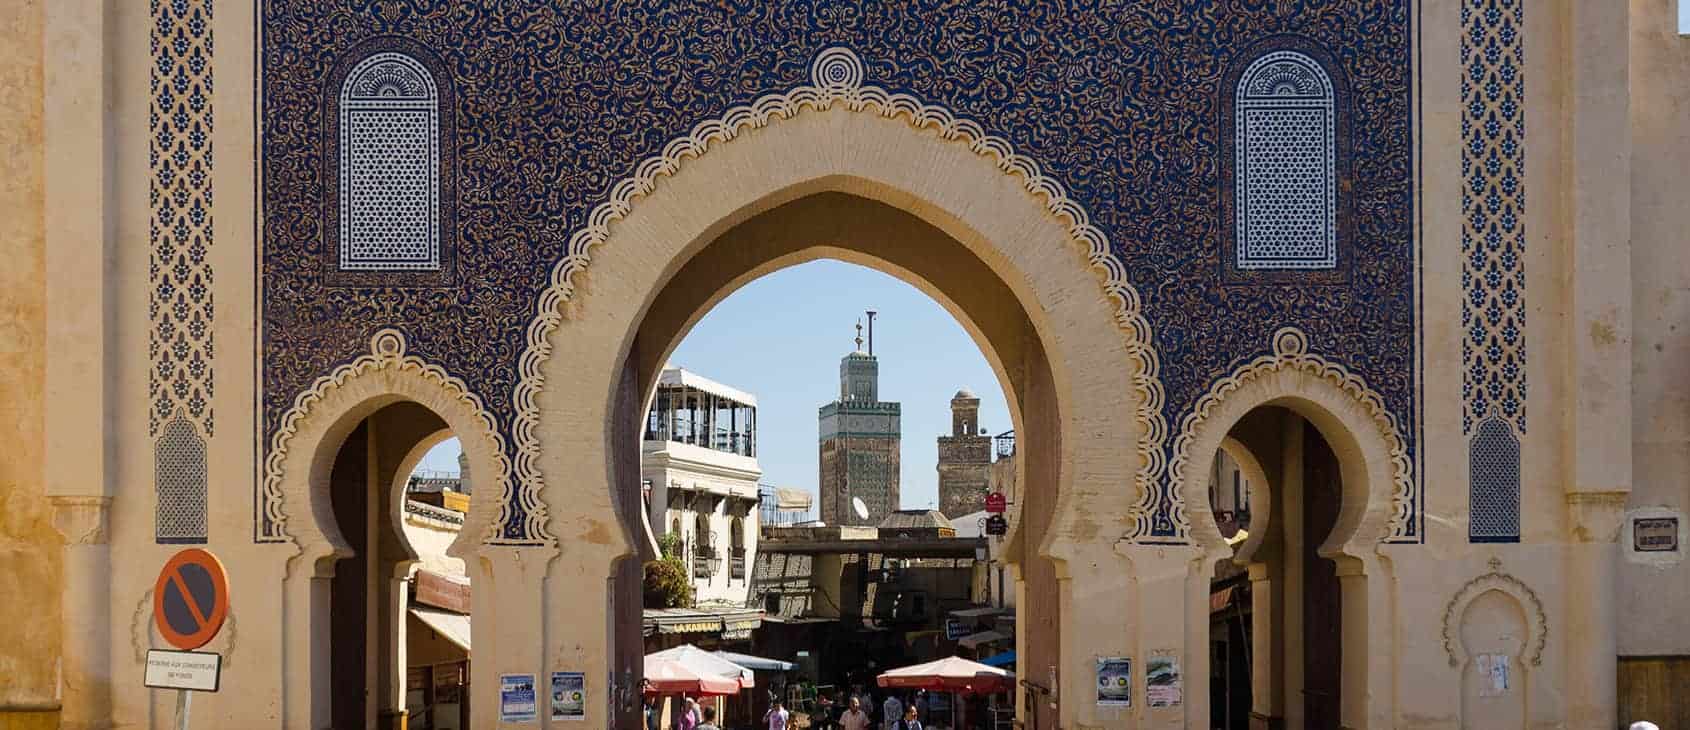 The Blue Gate, entrance to Fez medina